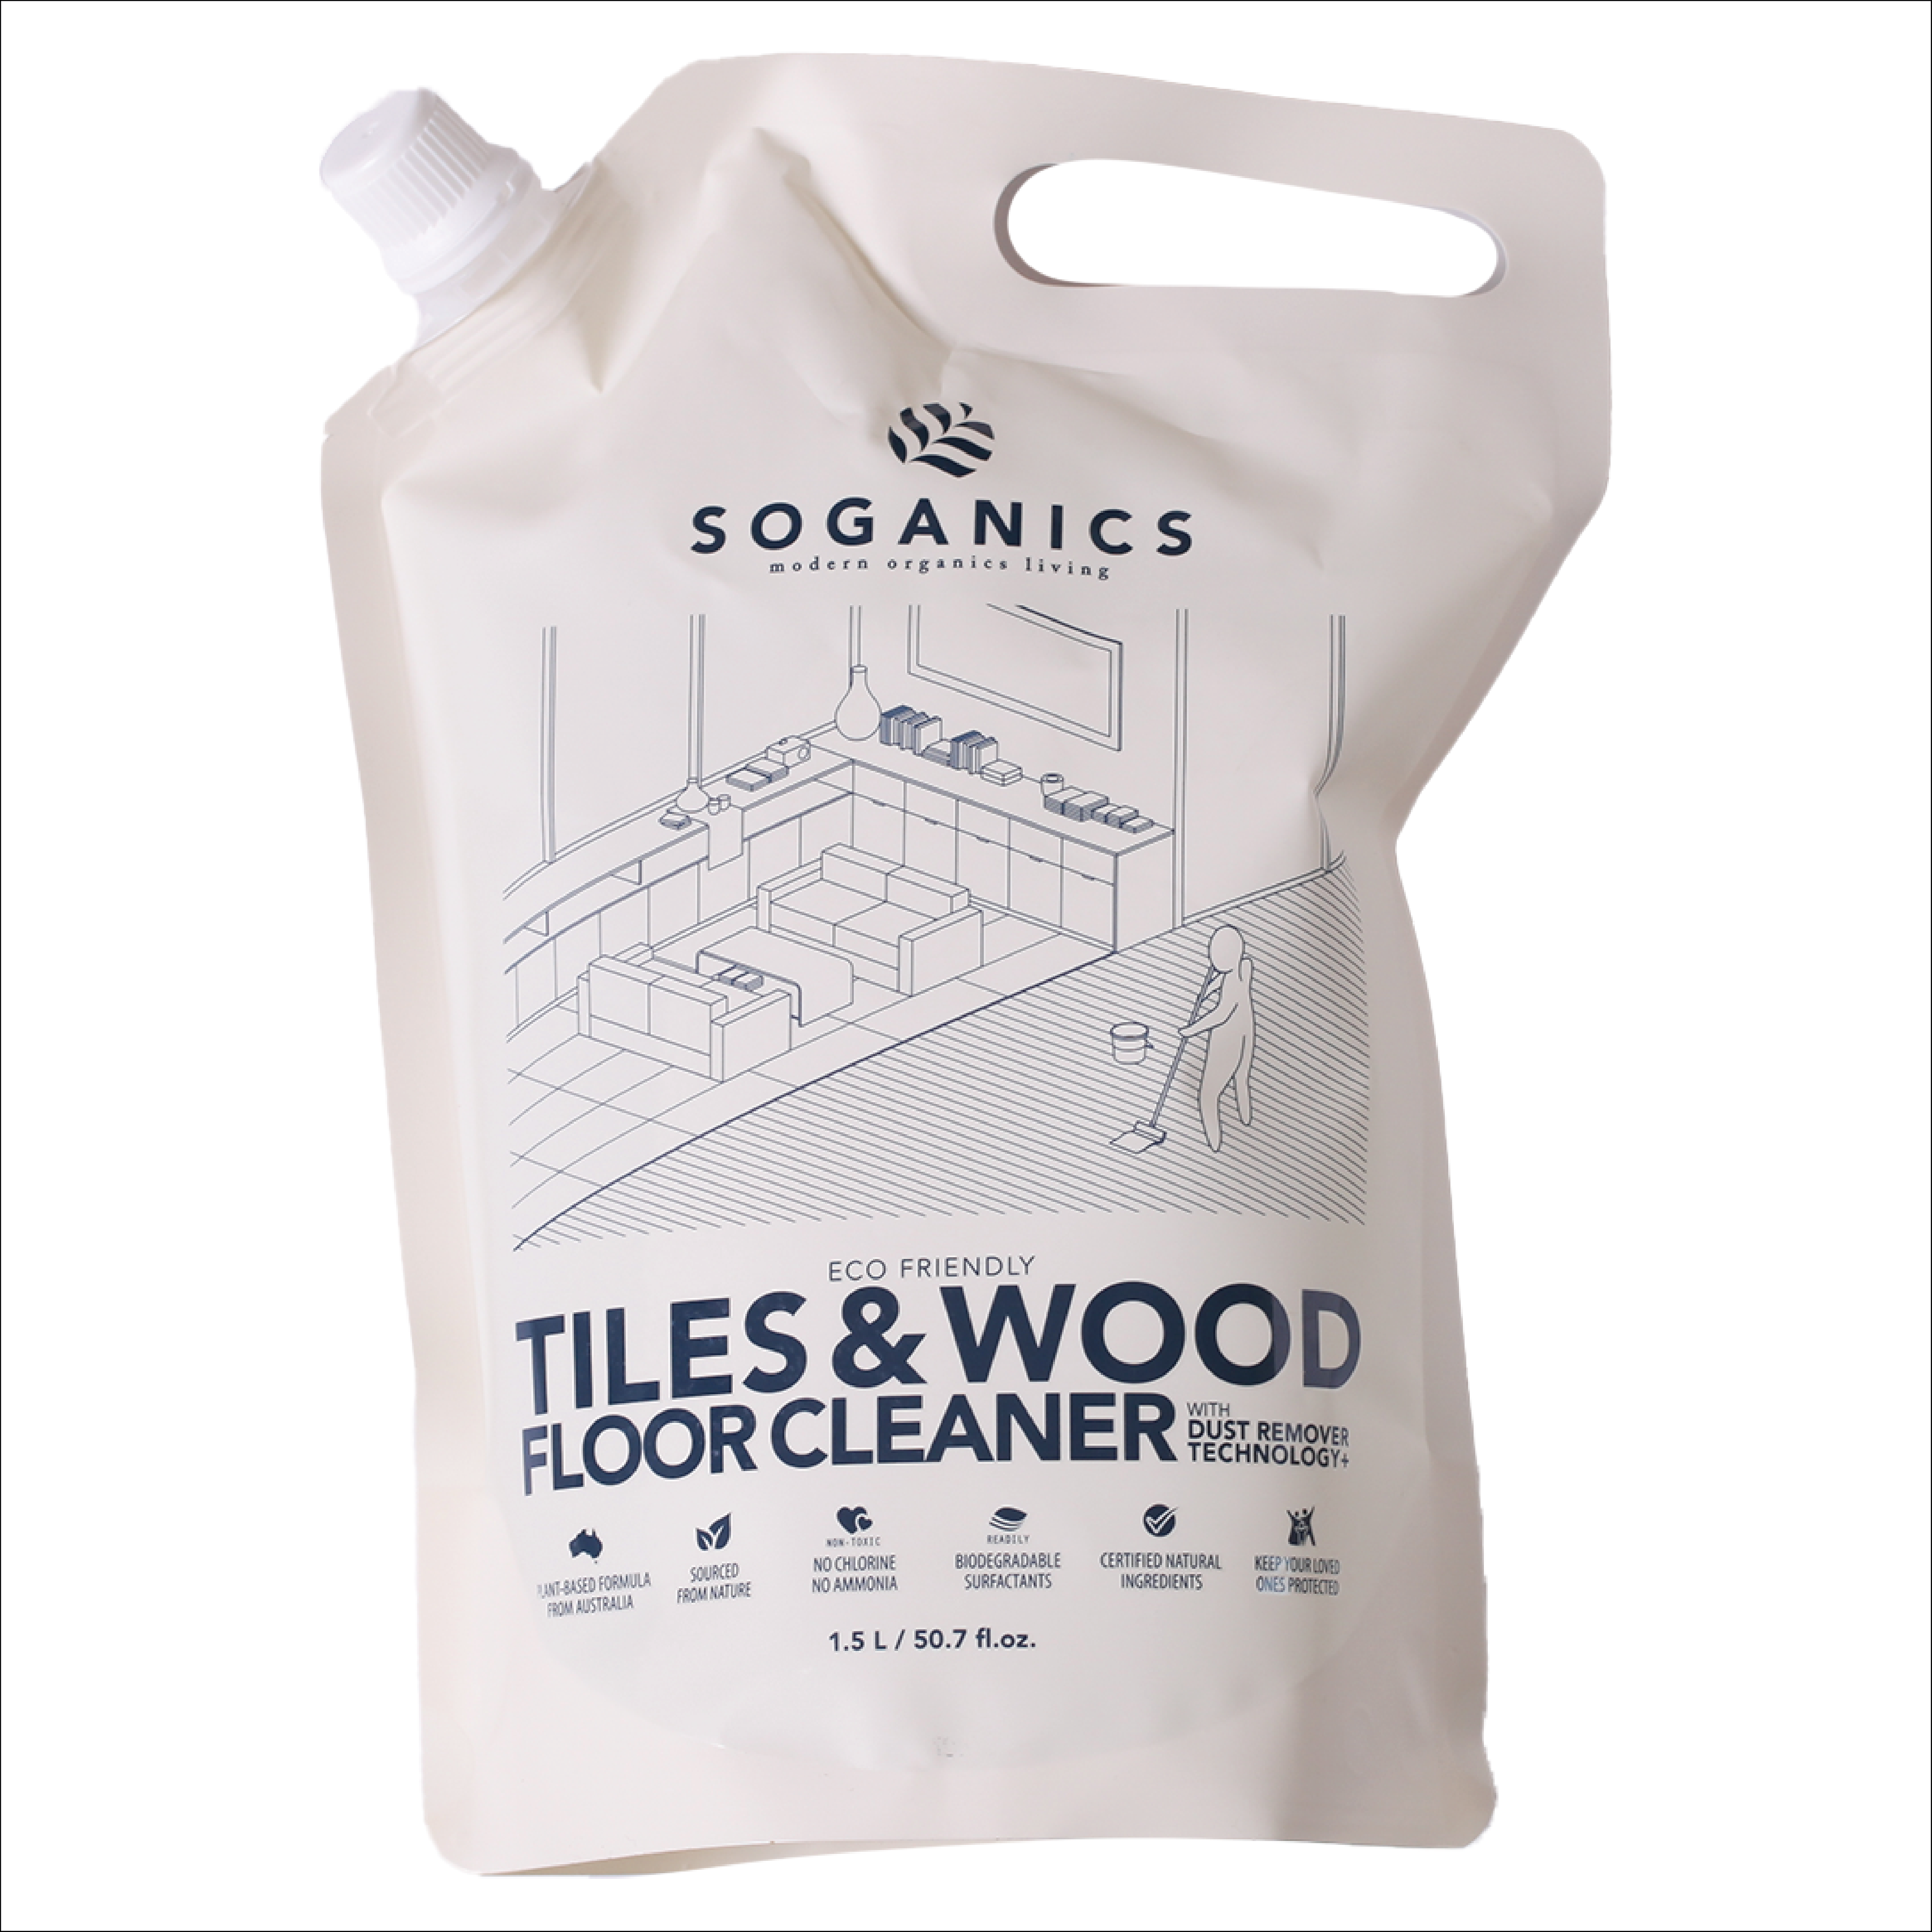 SOGANICS Tiles & Wood Floor Cleaner Refill 1.5L